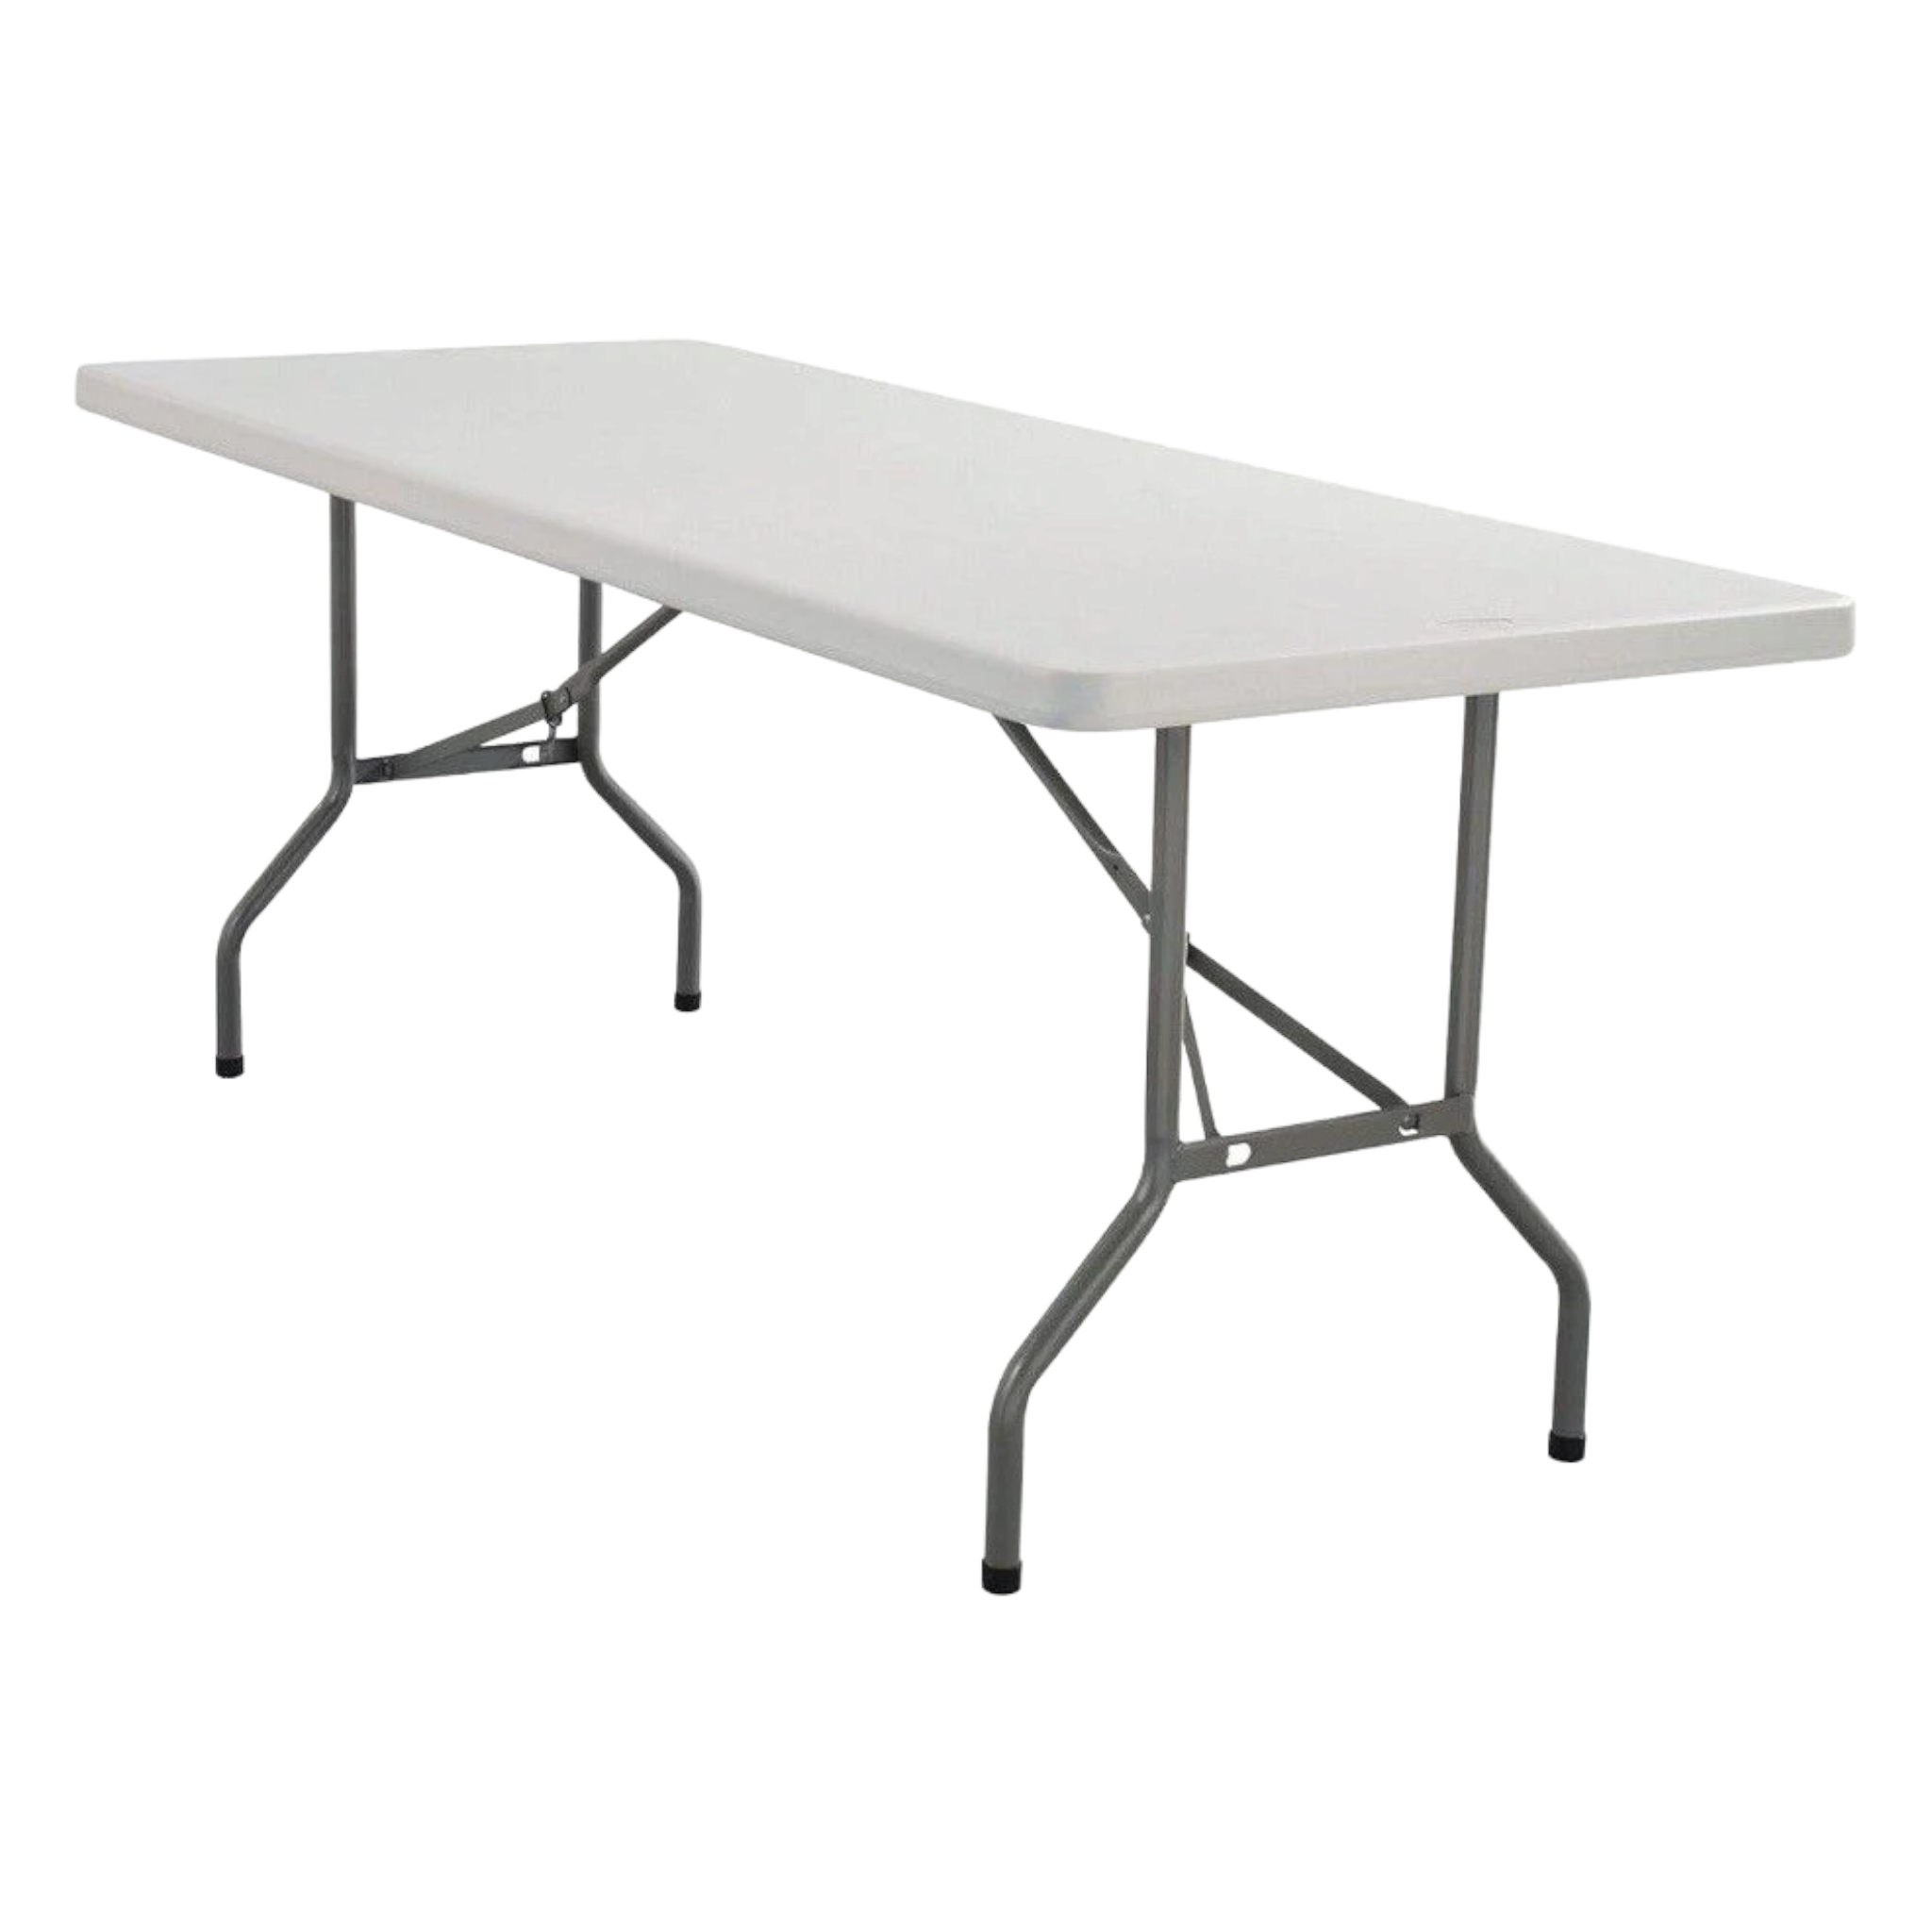 1.8m Folding Trestle Plastic Table 6ft White